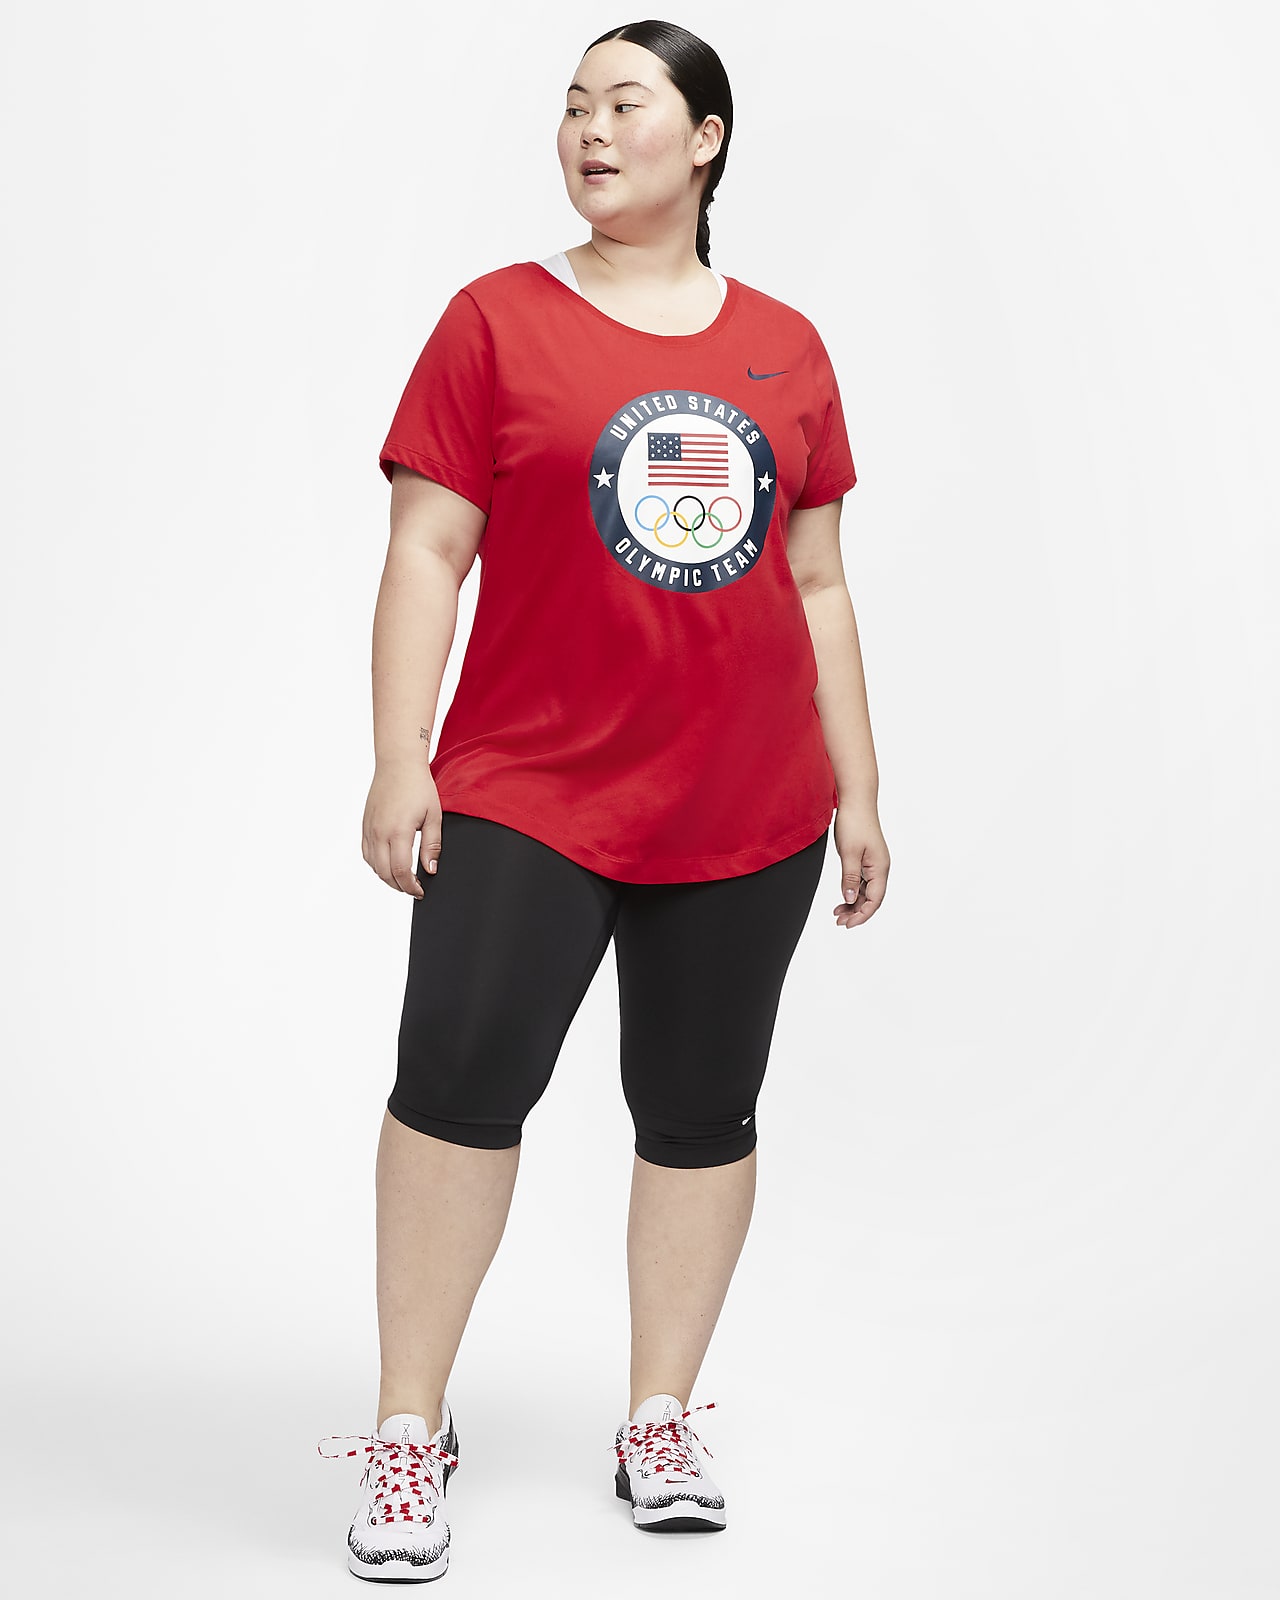 Ombord Gør det tungt Gå vandreture Nike Team USA Women's T-Shirt (Plus Size). Nike.com